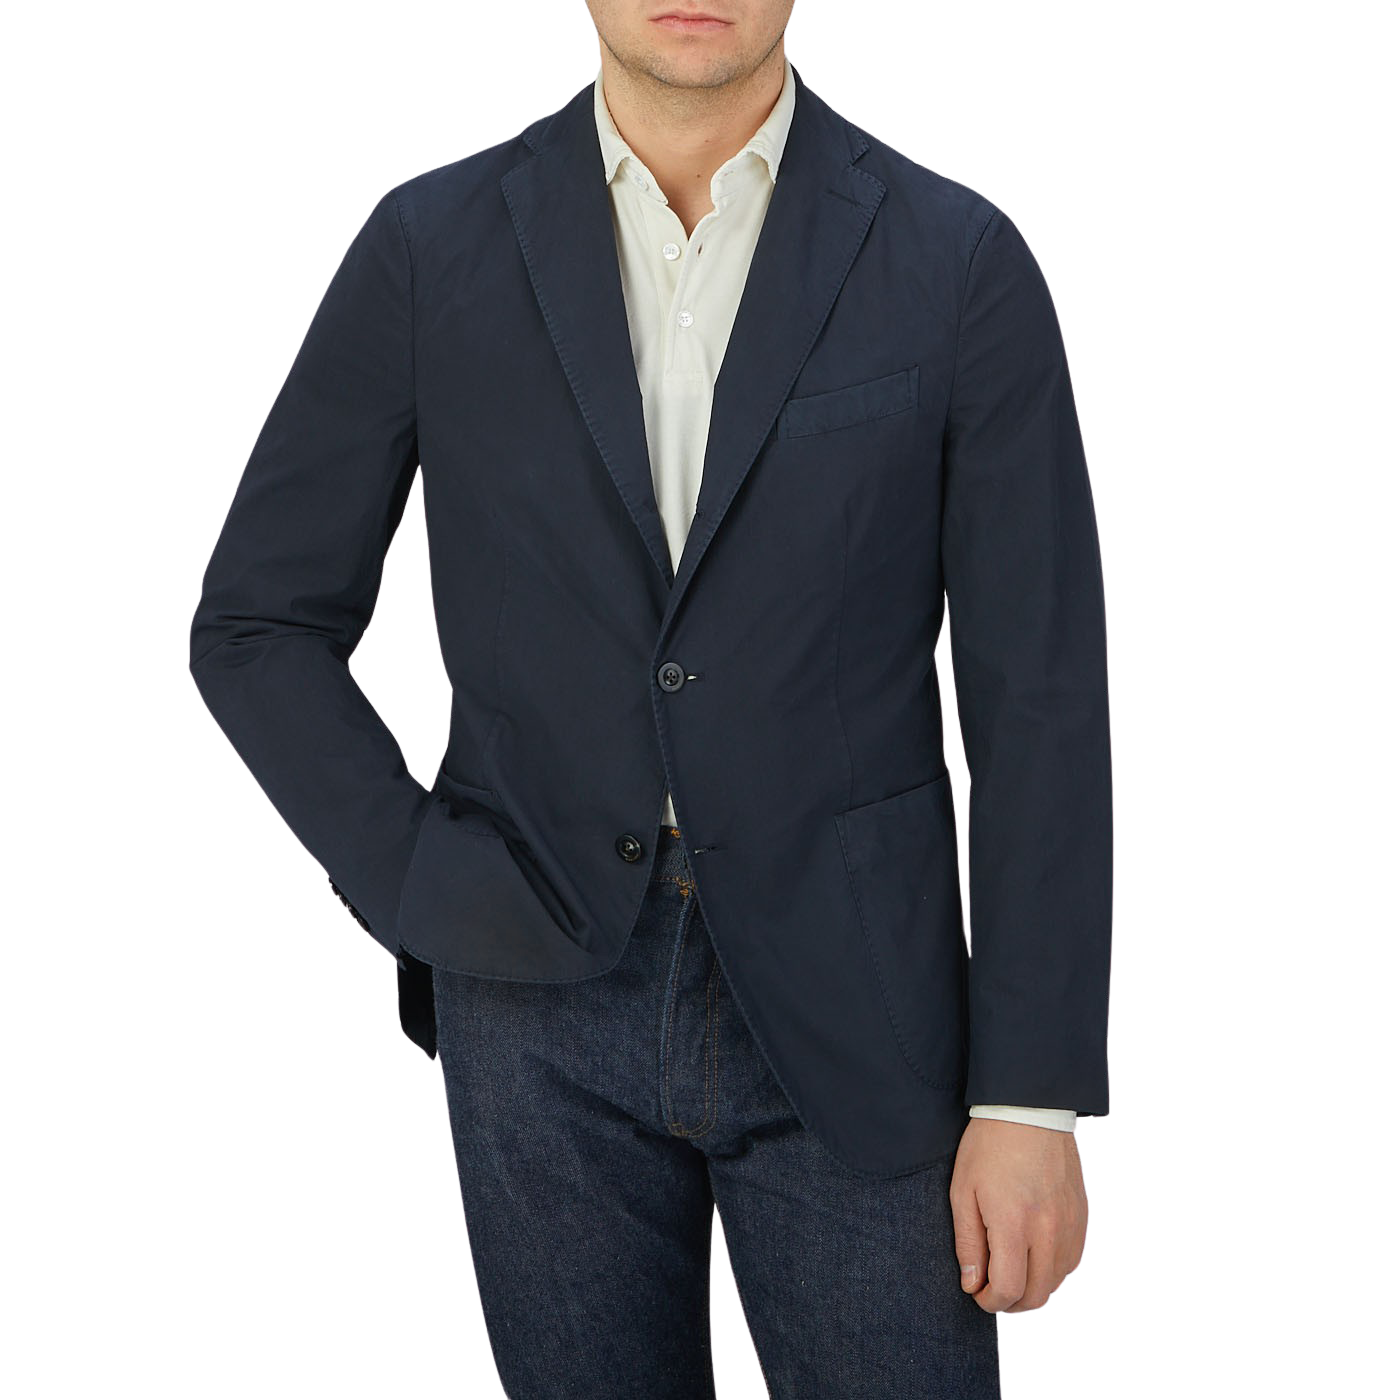 Man wearing an Italian Boglioli Dark Blue Washed Cotton K Jacket with unstructured craftsmanship, cream shirt, and blue jeans.